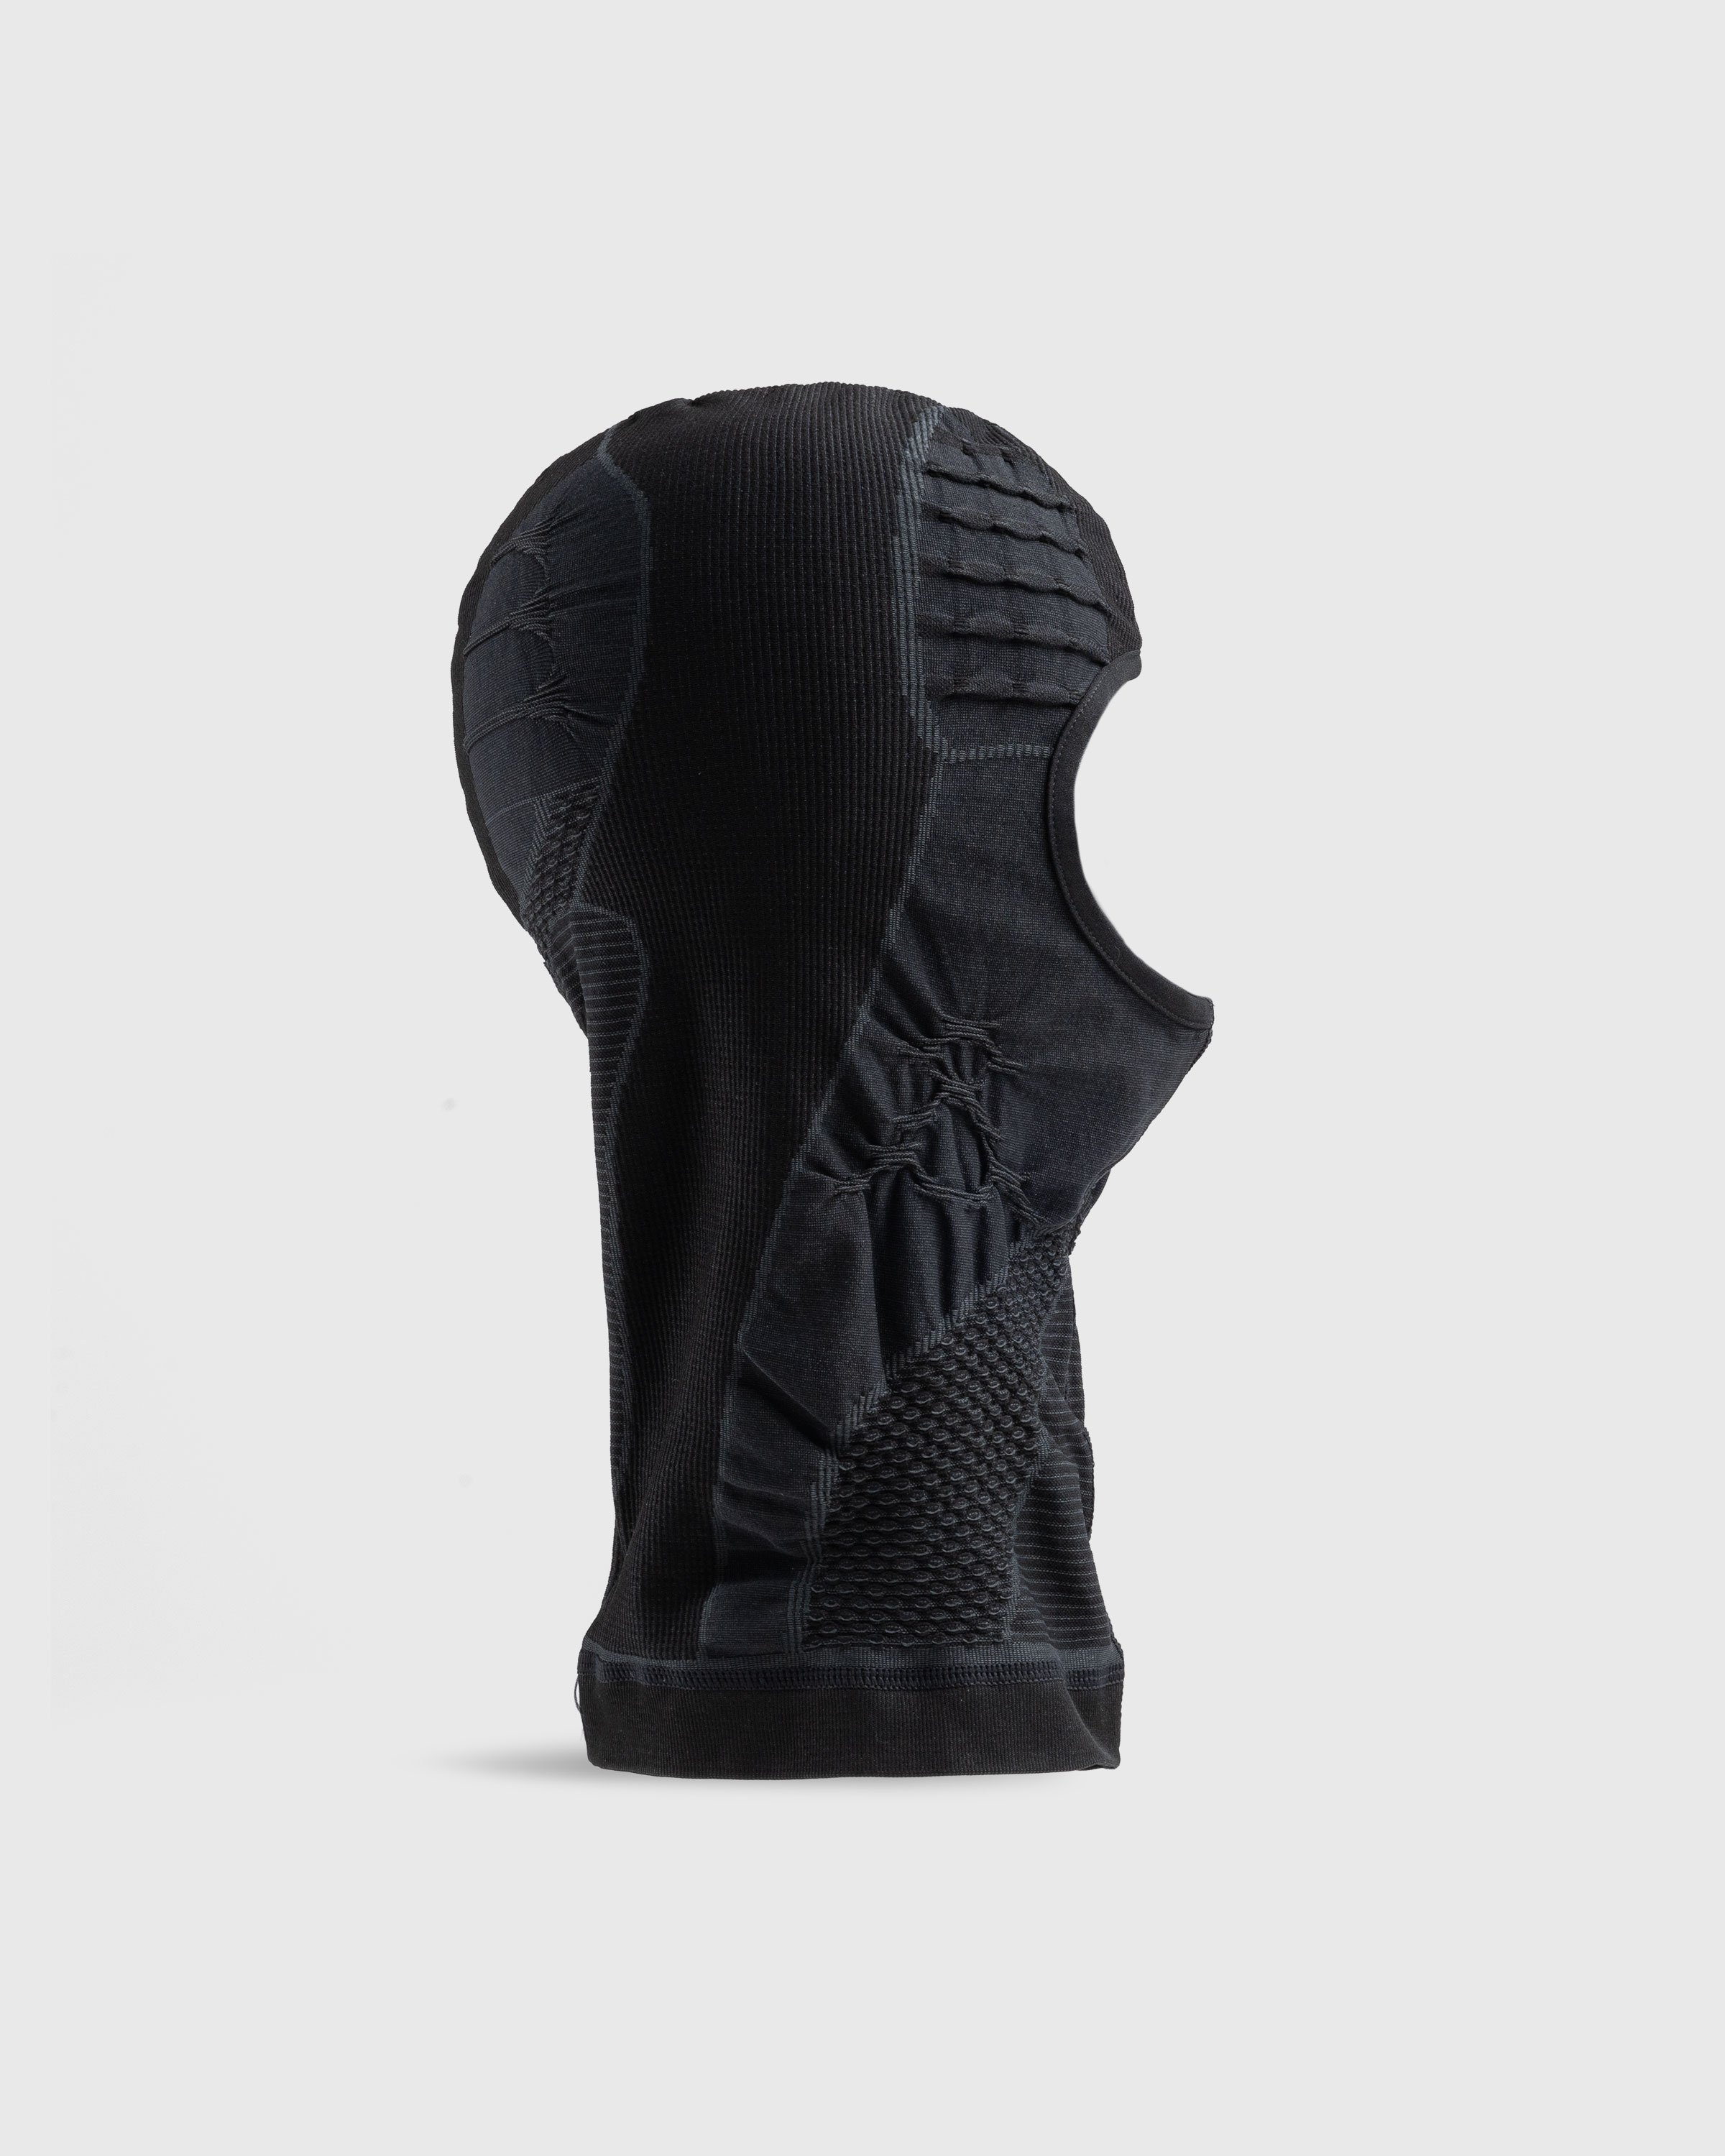 ROA – Balaclava 3D Knit Grey | Highsnobiety Shop